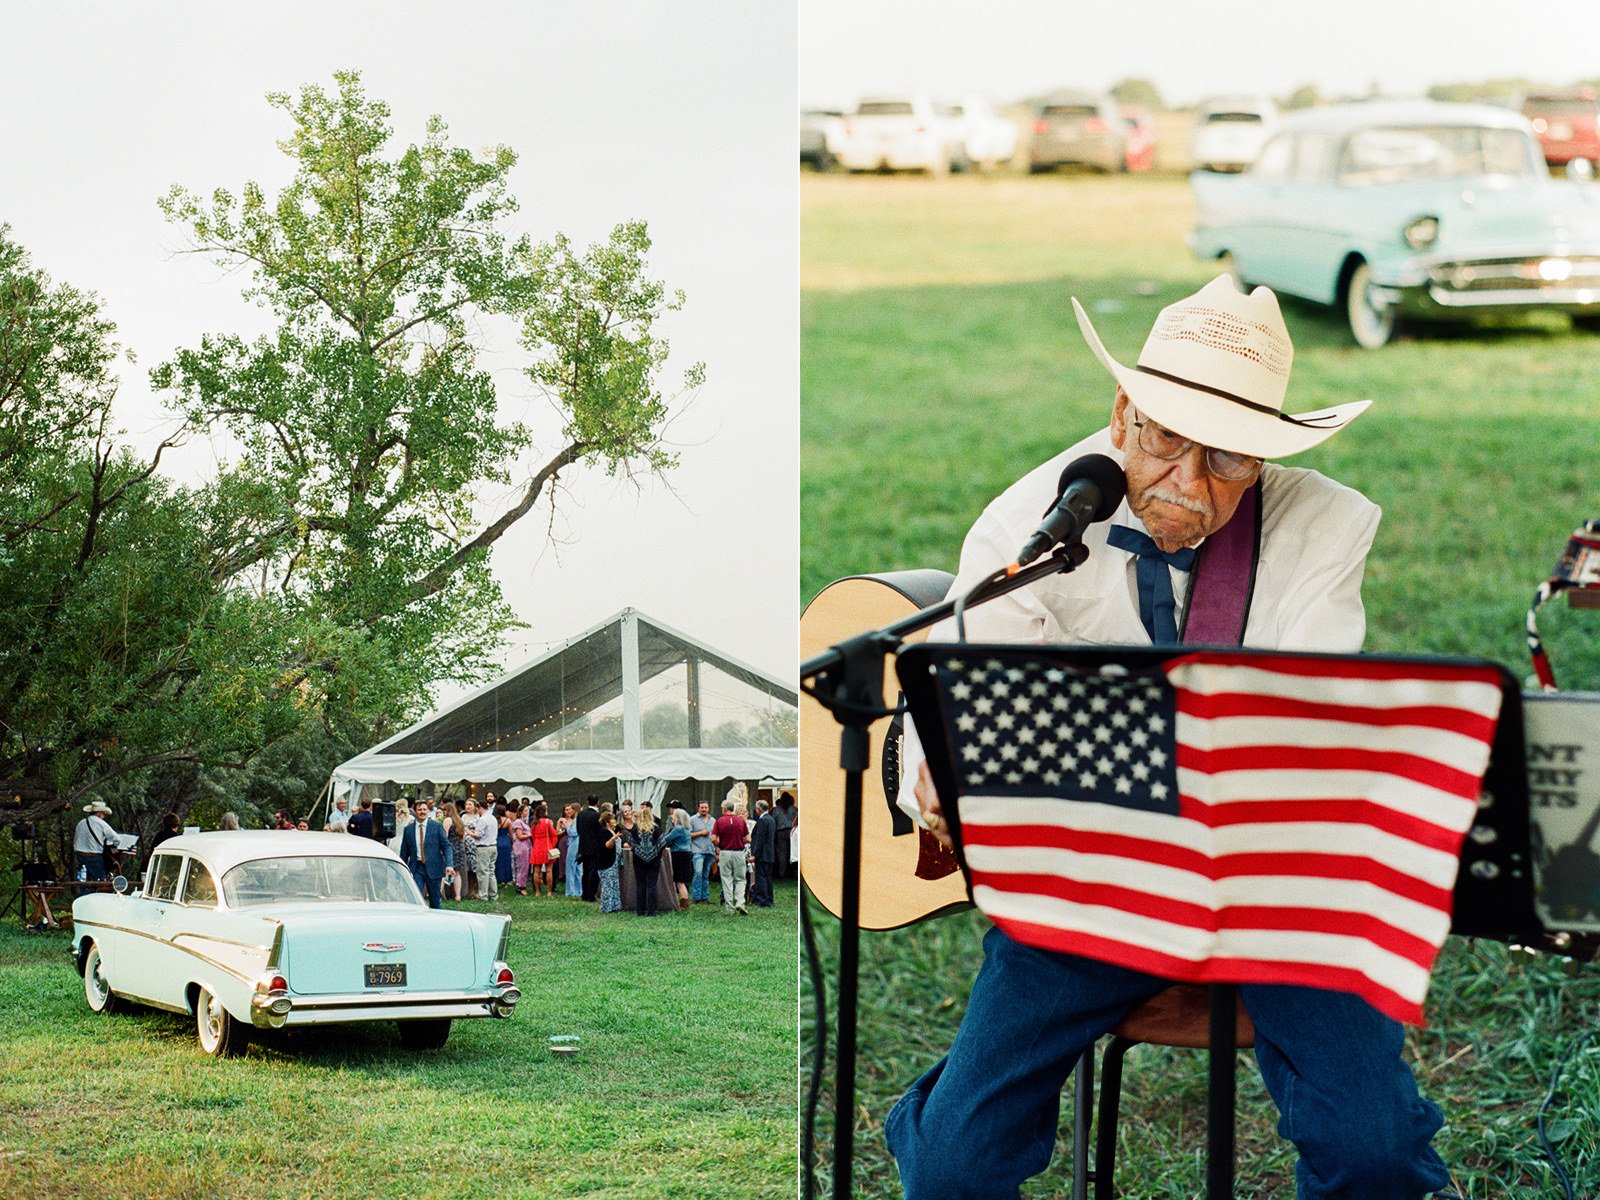 creekside-wedding-beer-tent-reception-sioux-falls-rapid-city-south-dakota-photographer-michael-liedtke007.jpg